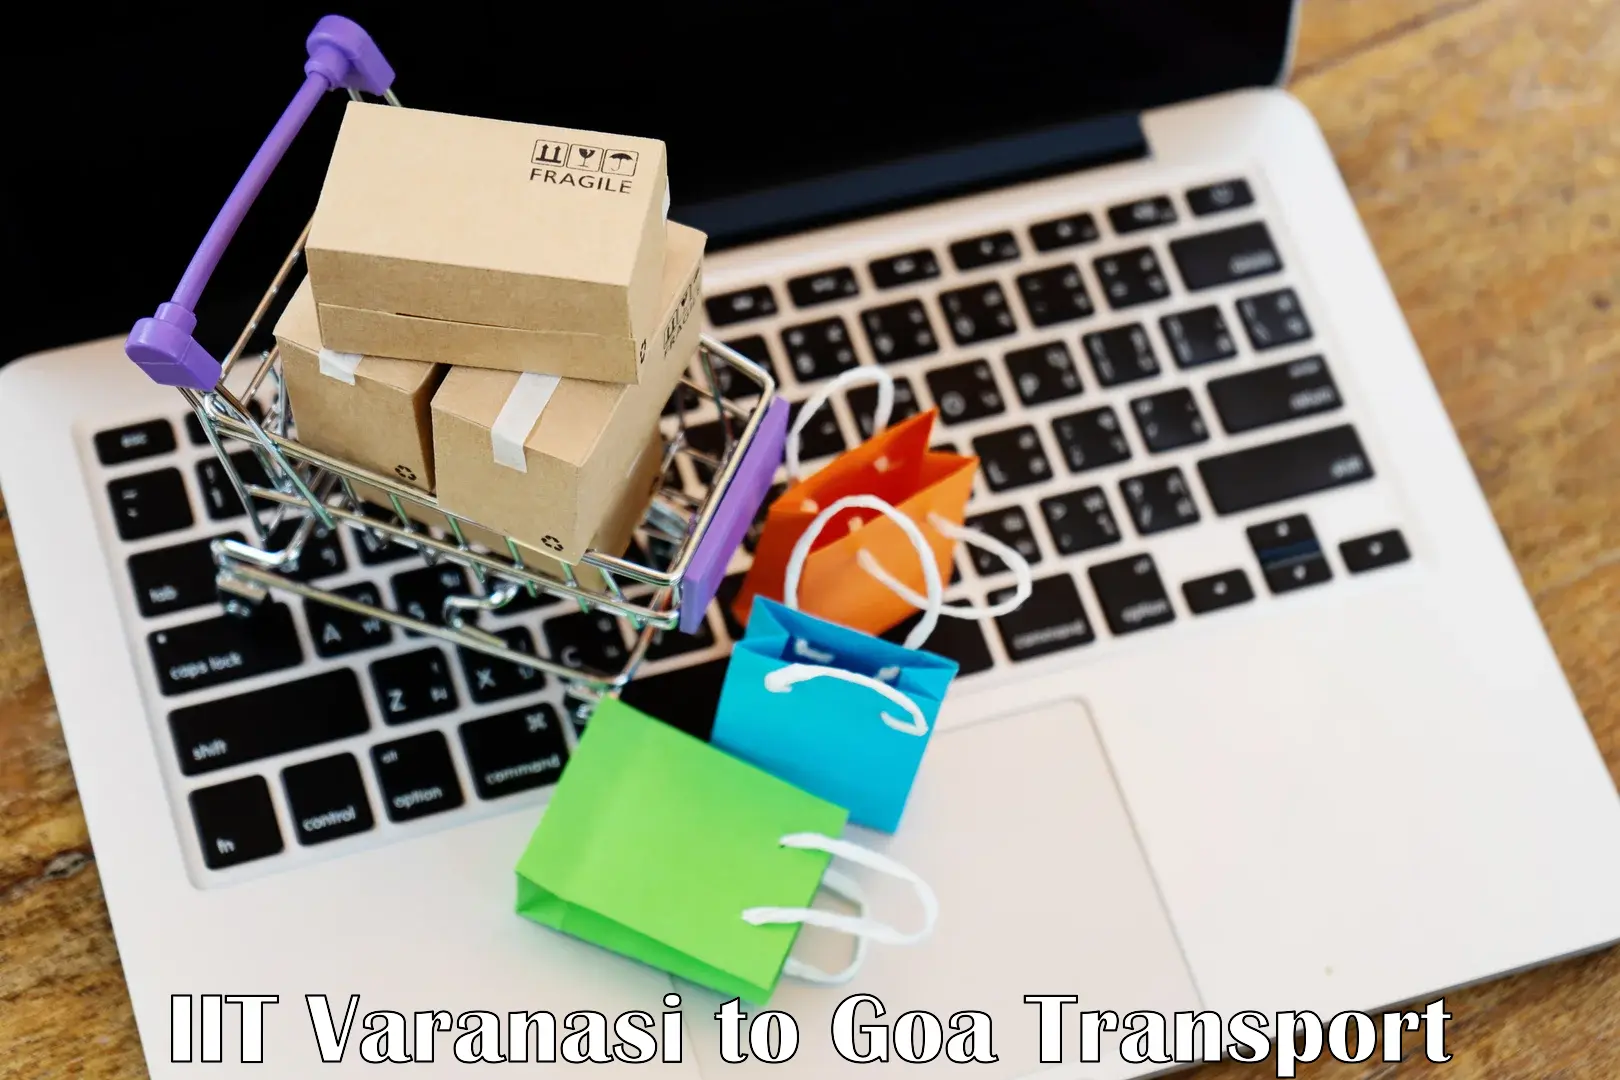 Daily transport service IIT Varanasi to Panjim